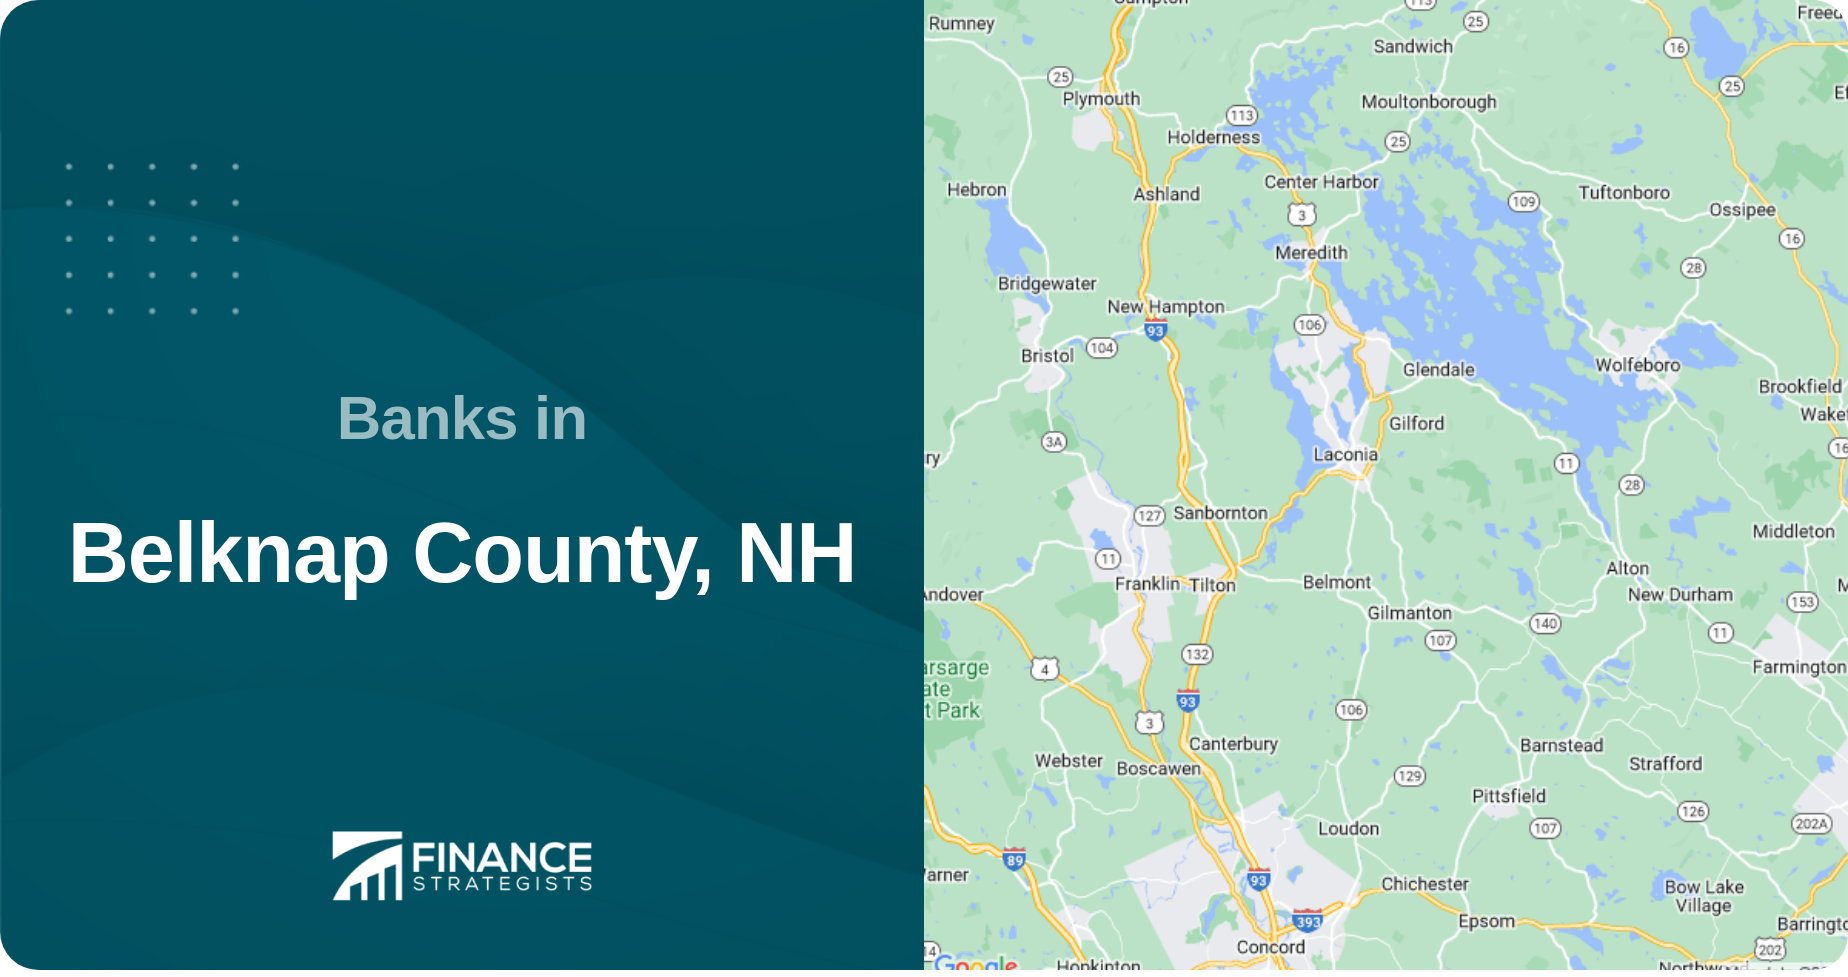 Banks in Belknap County, NH